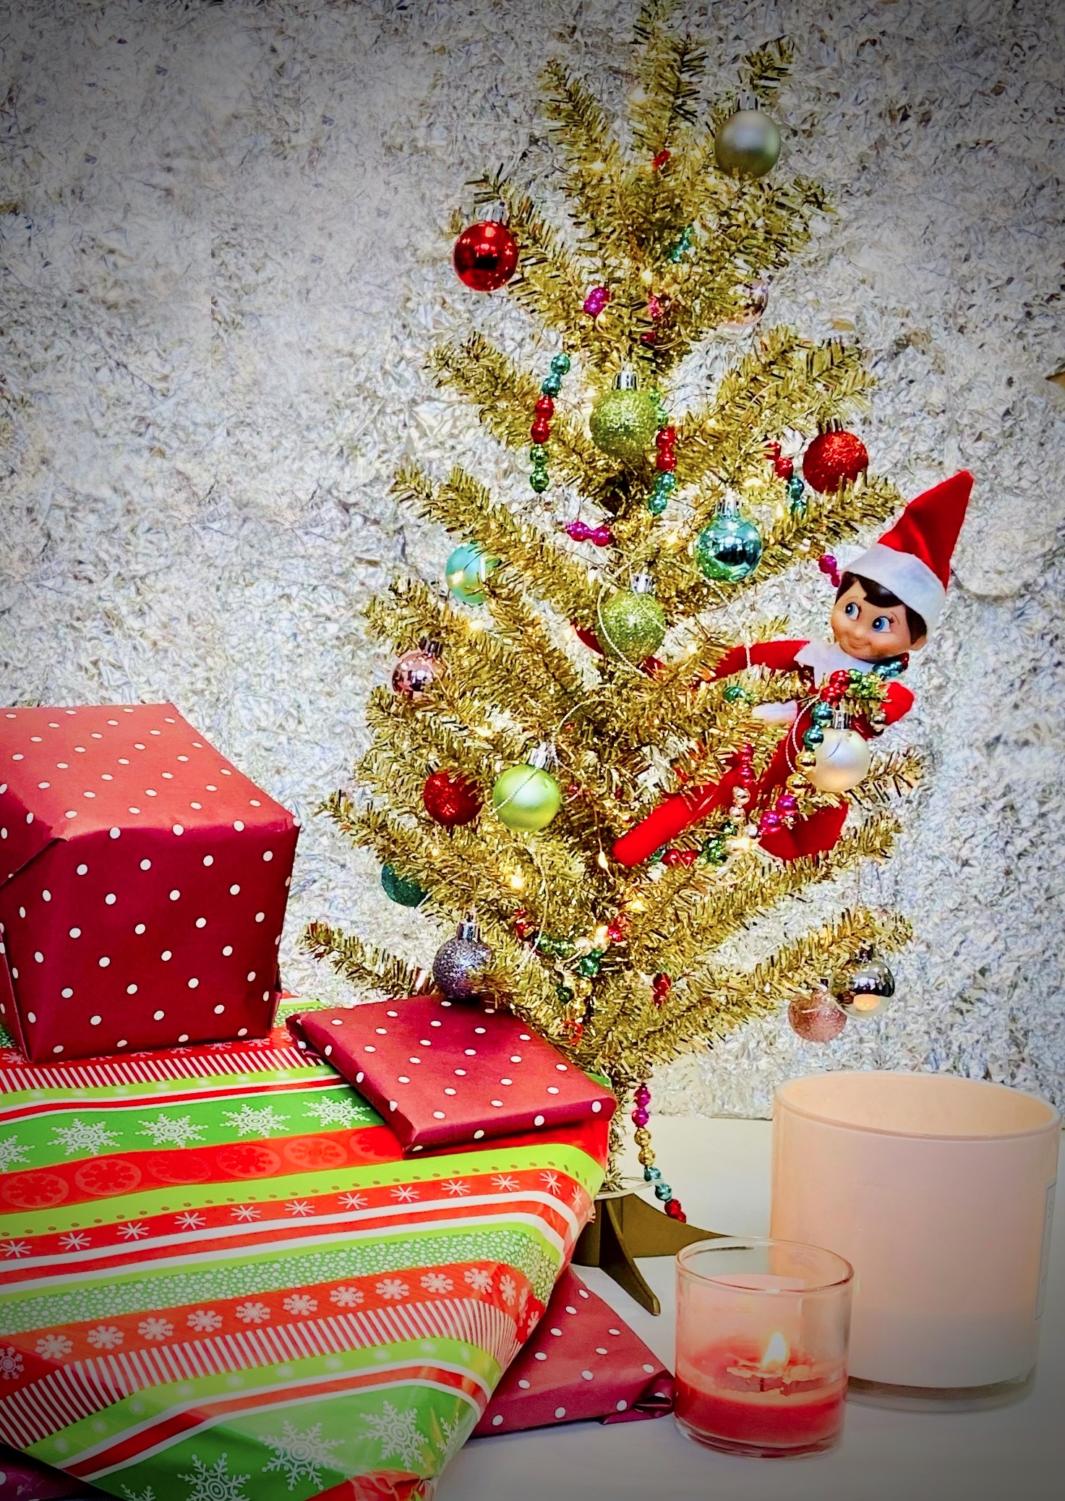 Festive elf on a tree